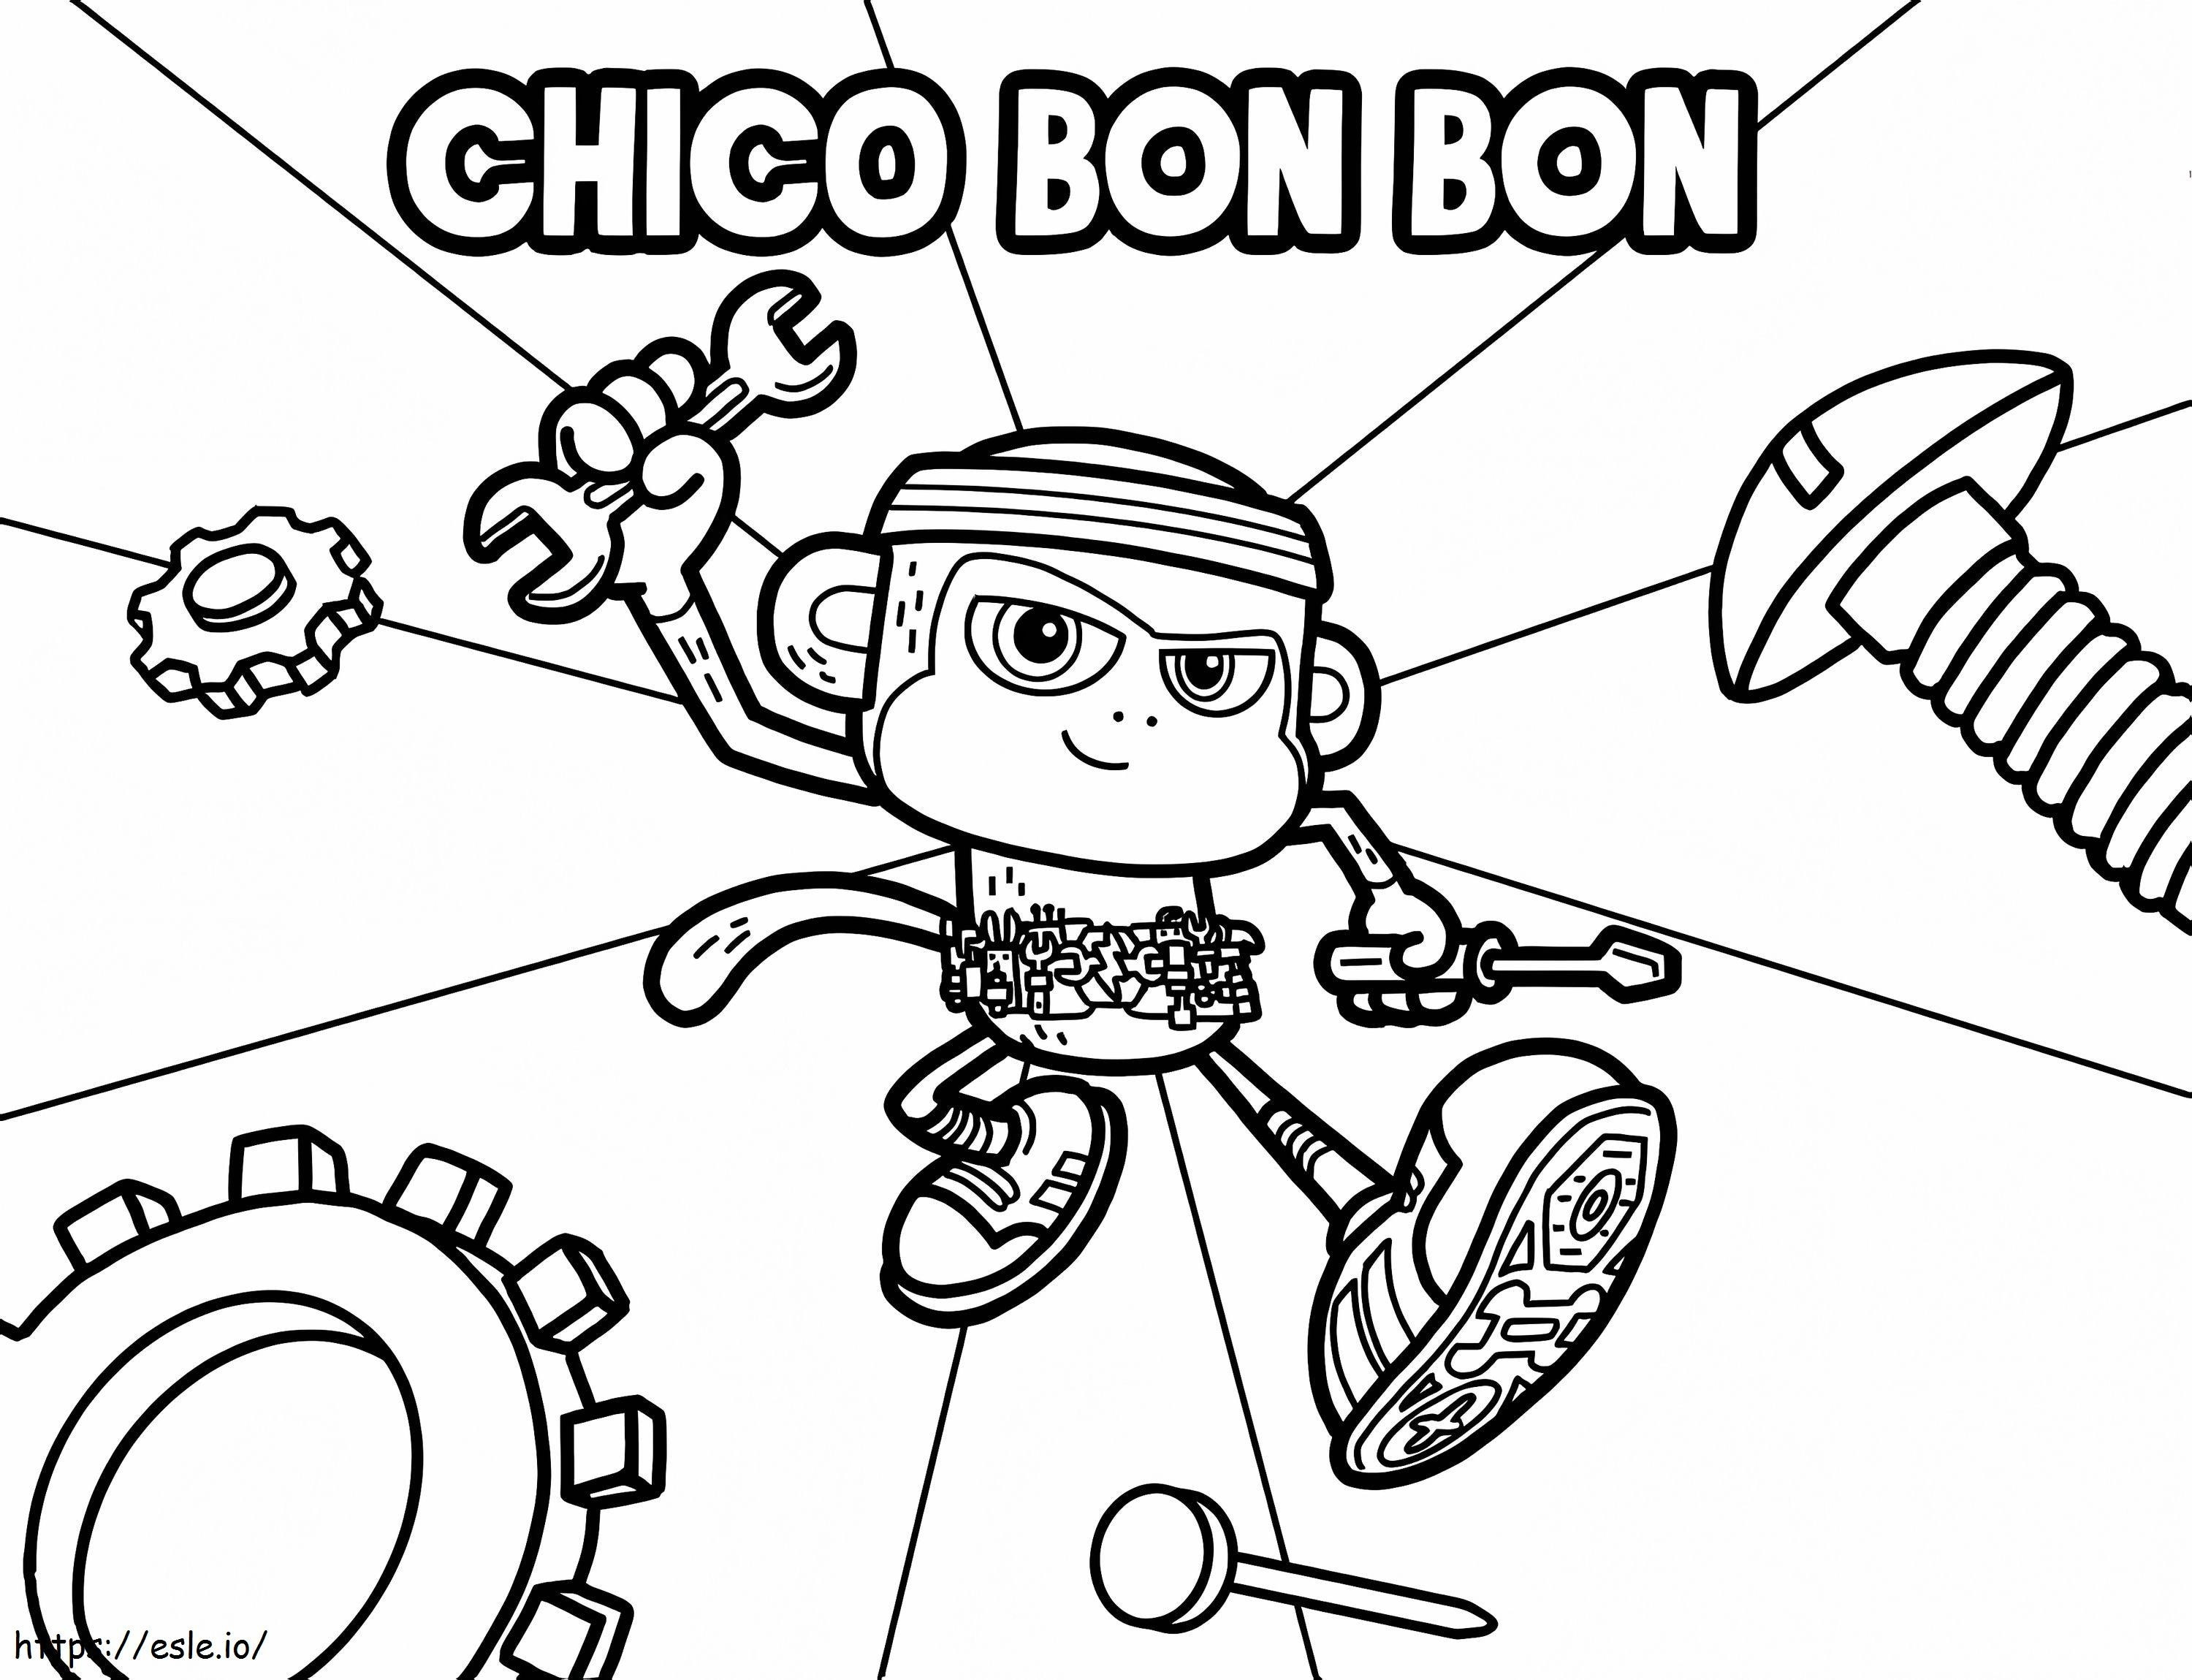 Cool Chico Bon Bon coloring page